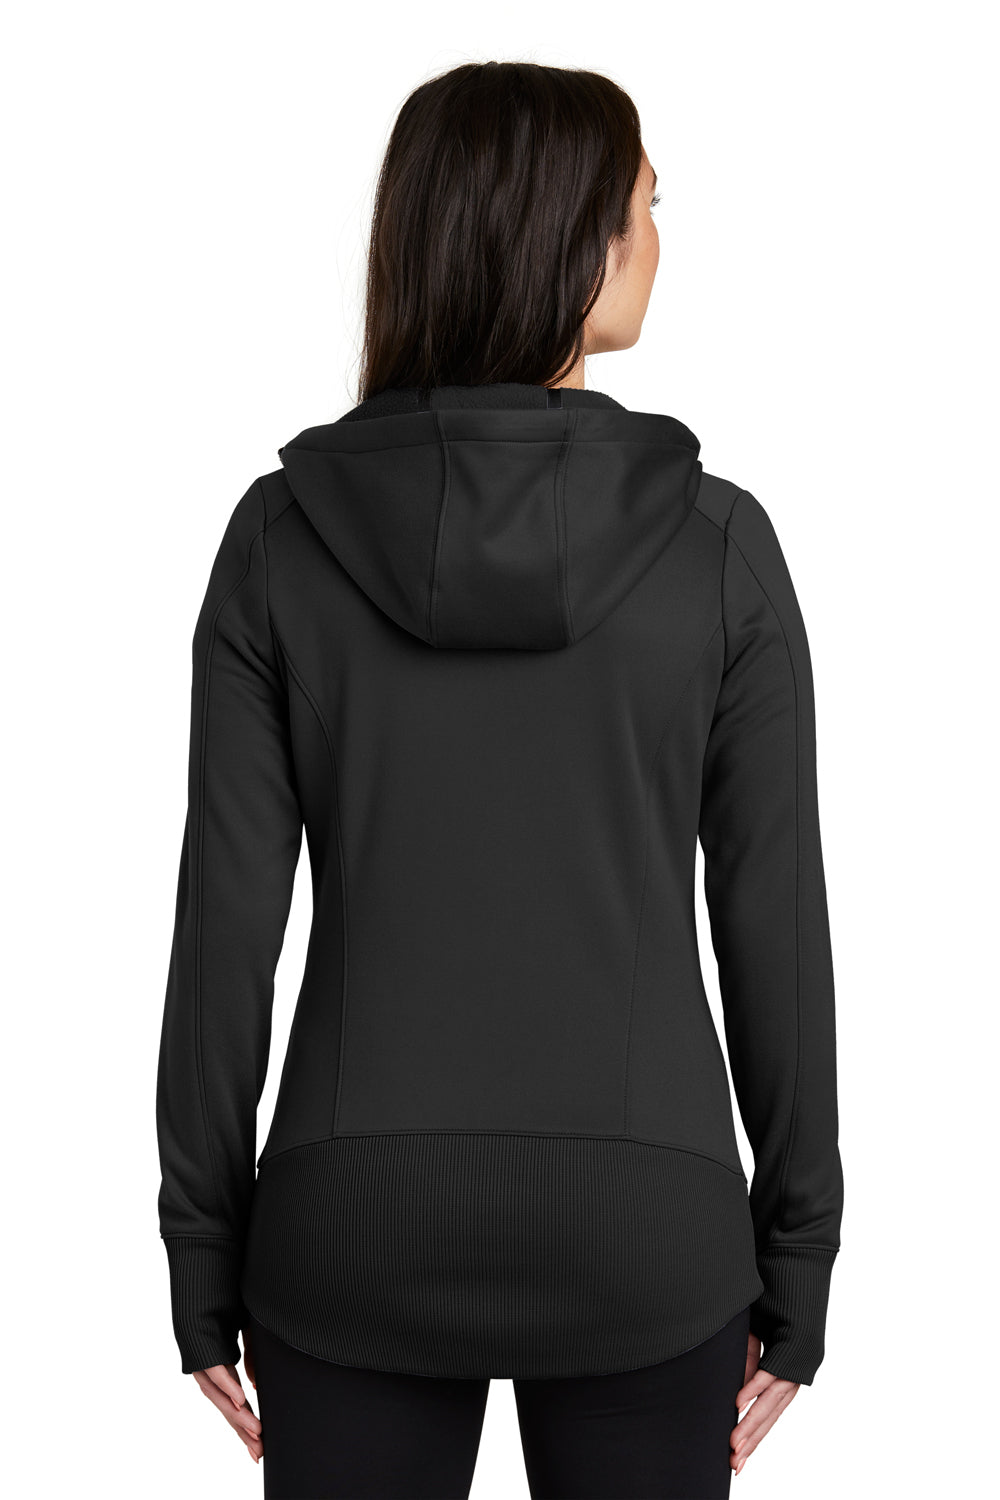 New Era LNEA522 Womens Venue Moisture Wicking Fleece Full Zip Hooded Sweatshirt Hoodie Black Back